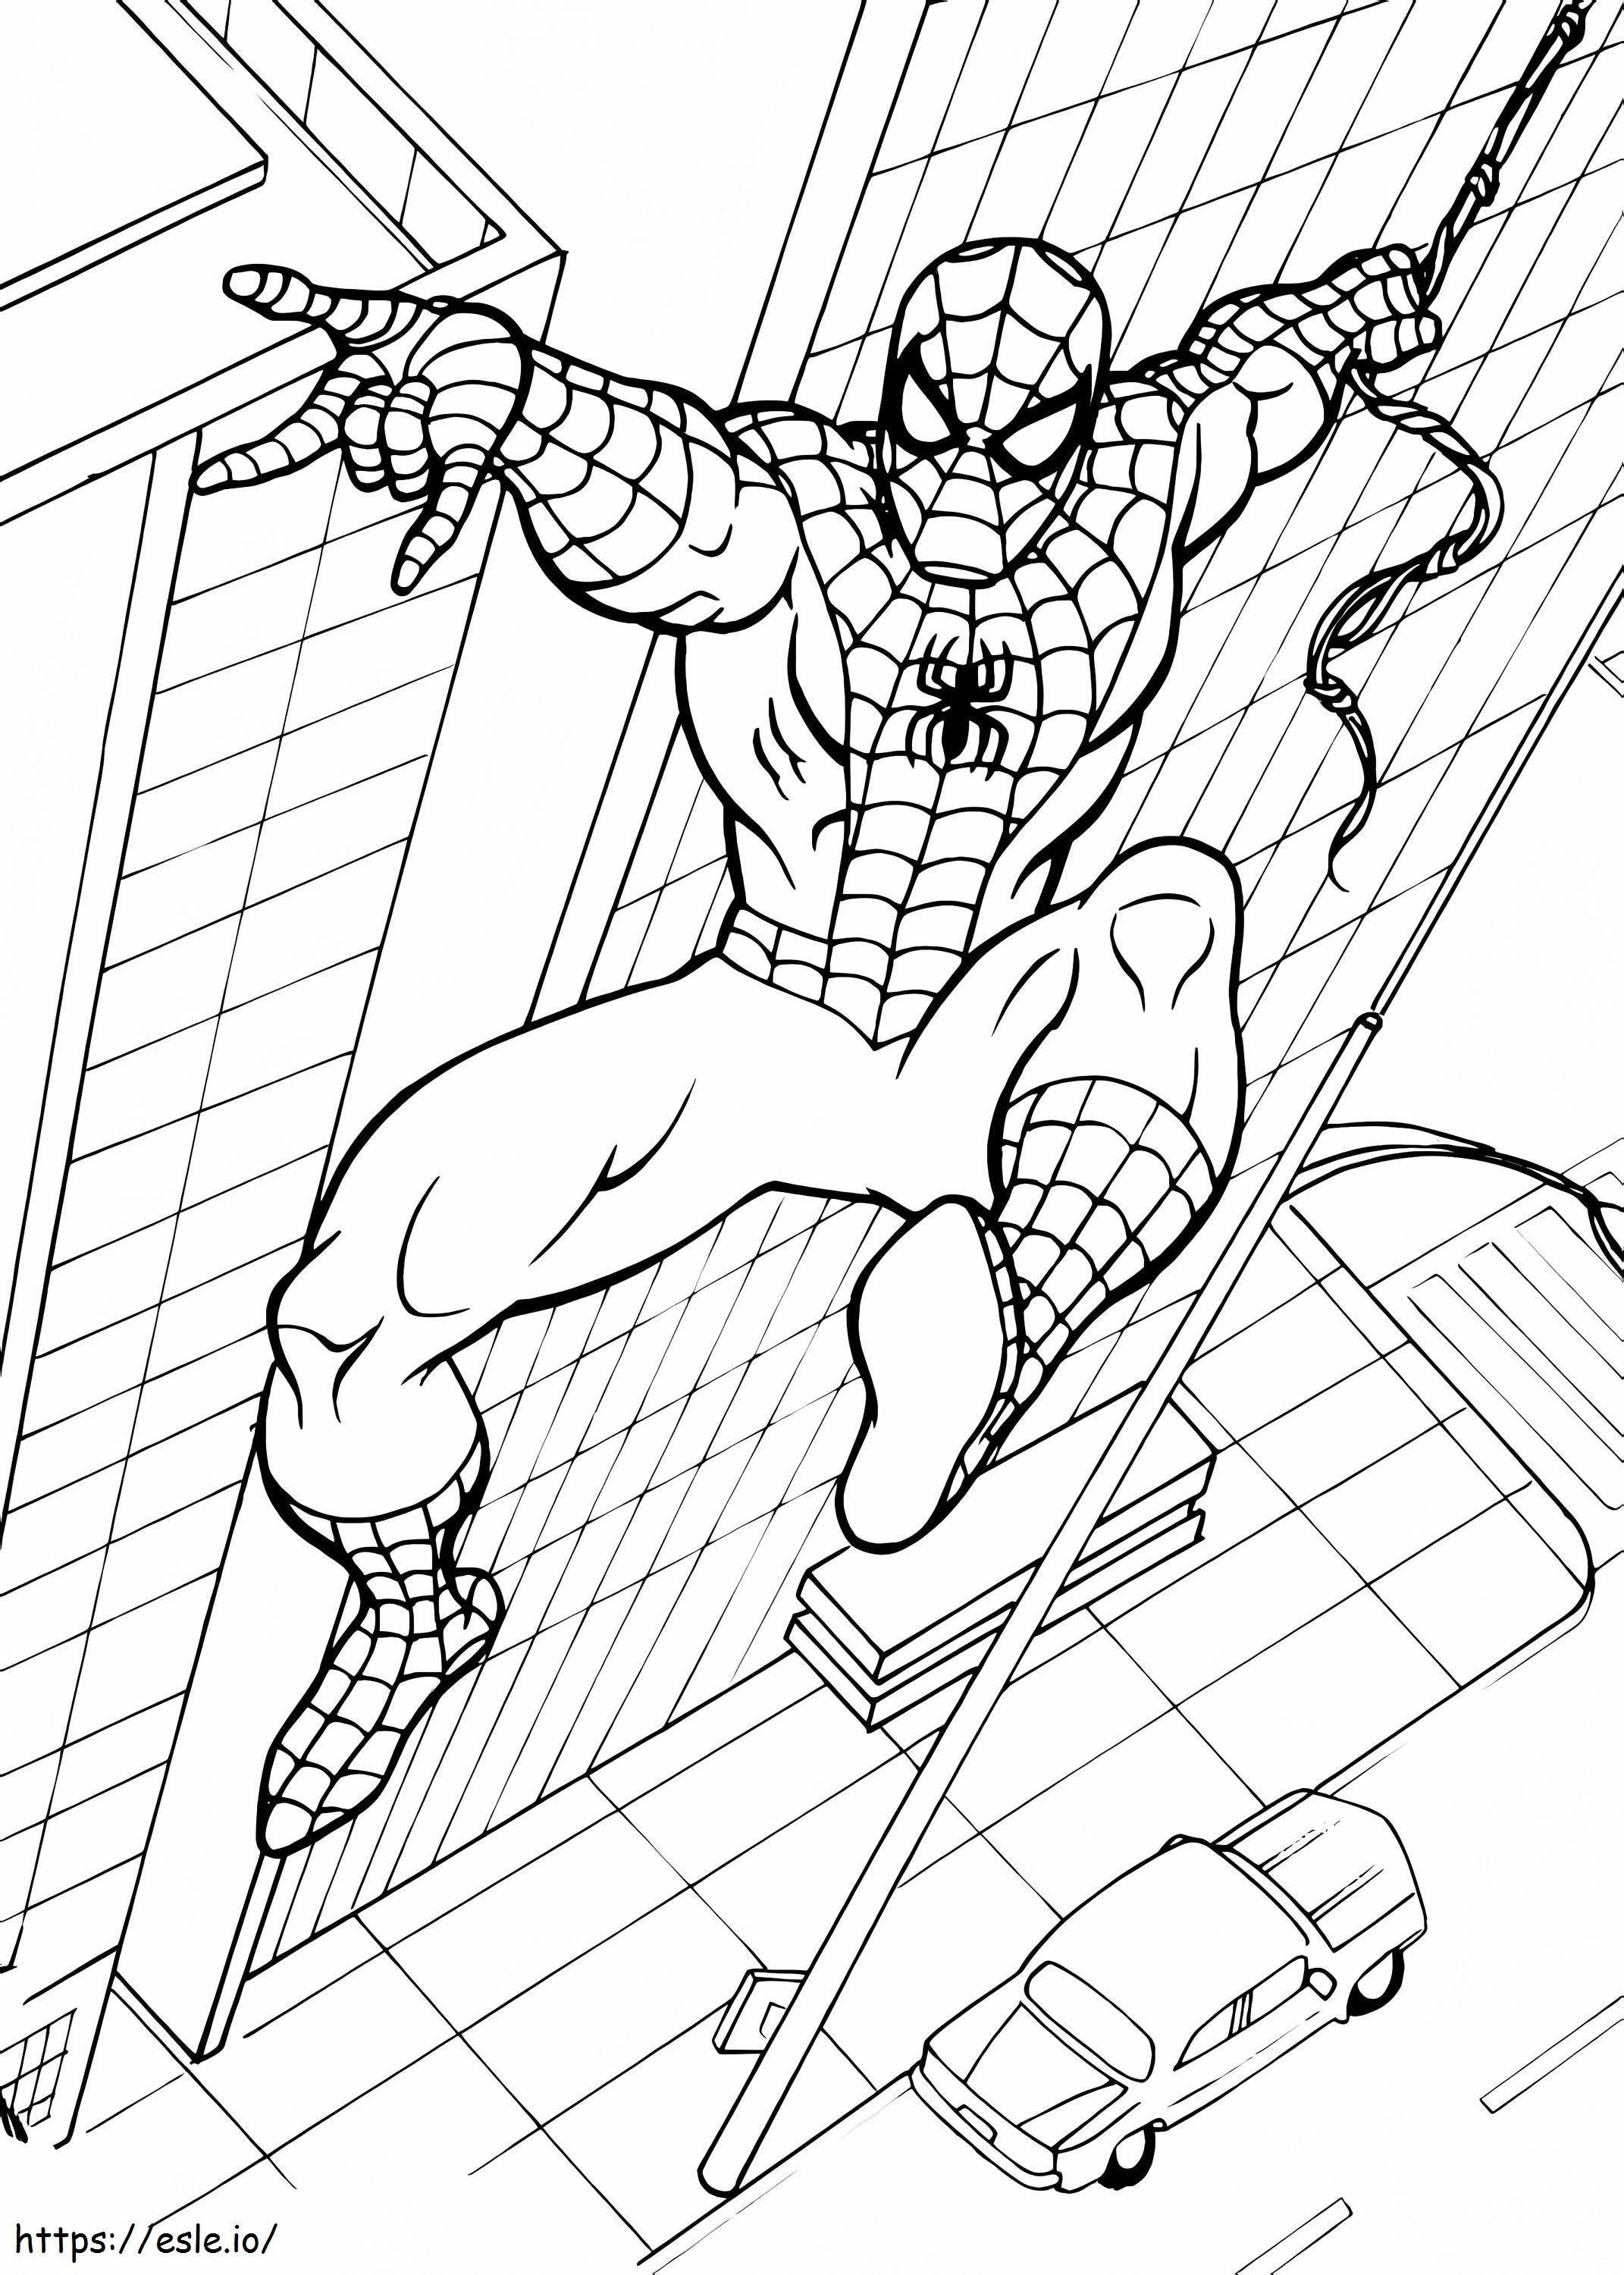 Marvelheld Spiderman kleurplaat kleurplaat